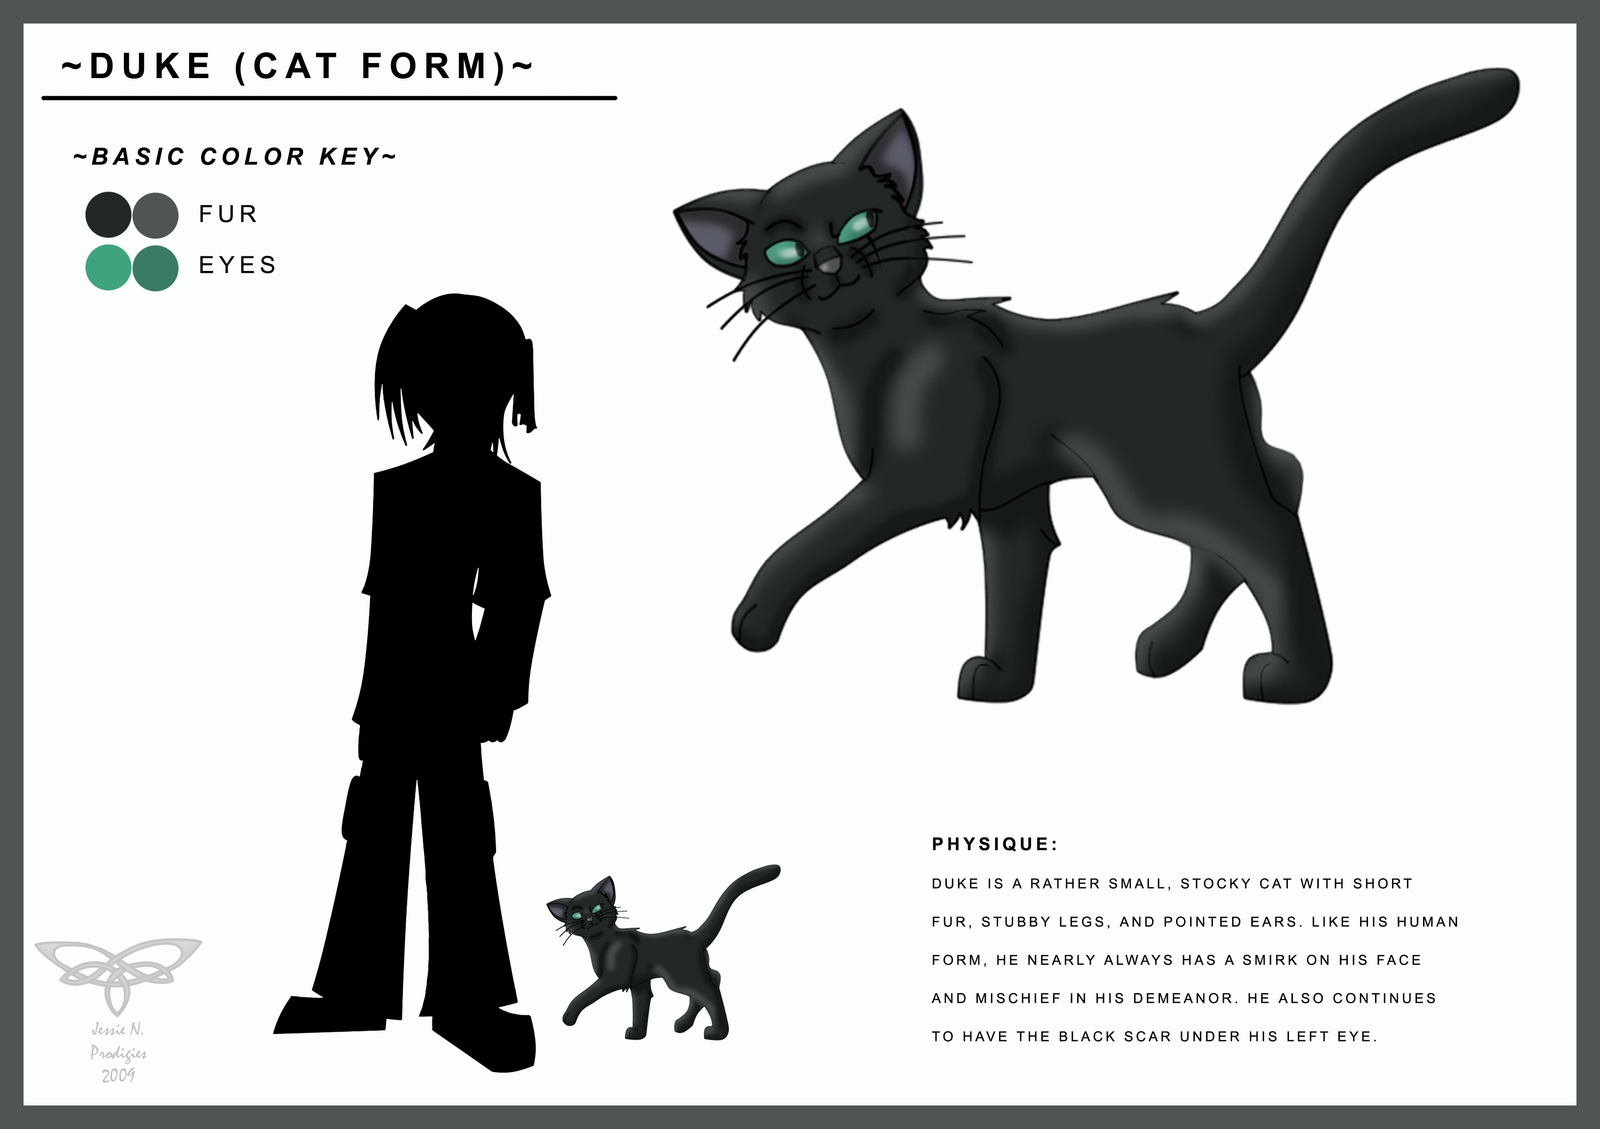 Character Sheet: Duke (Cat Form) by Prodigies